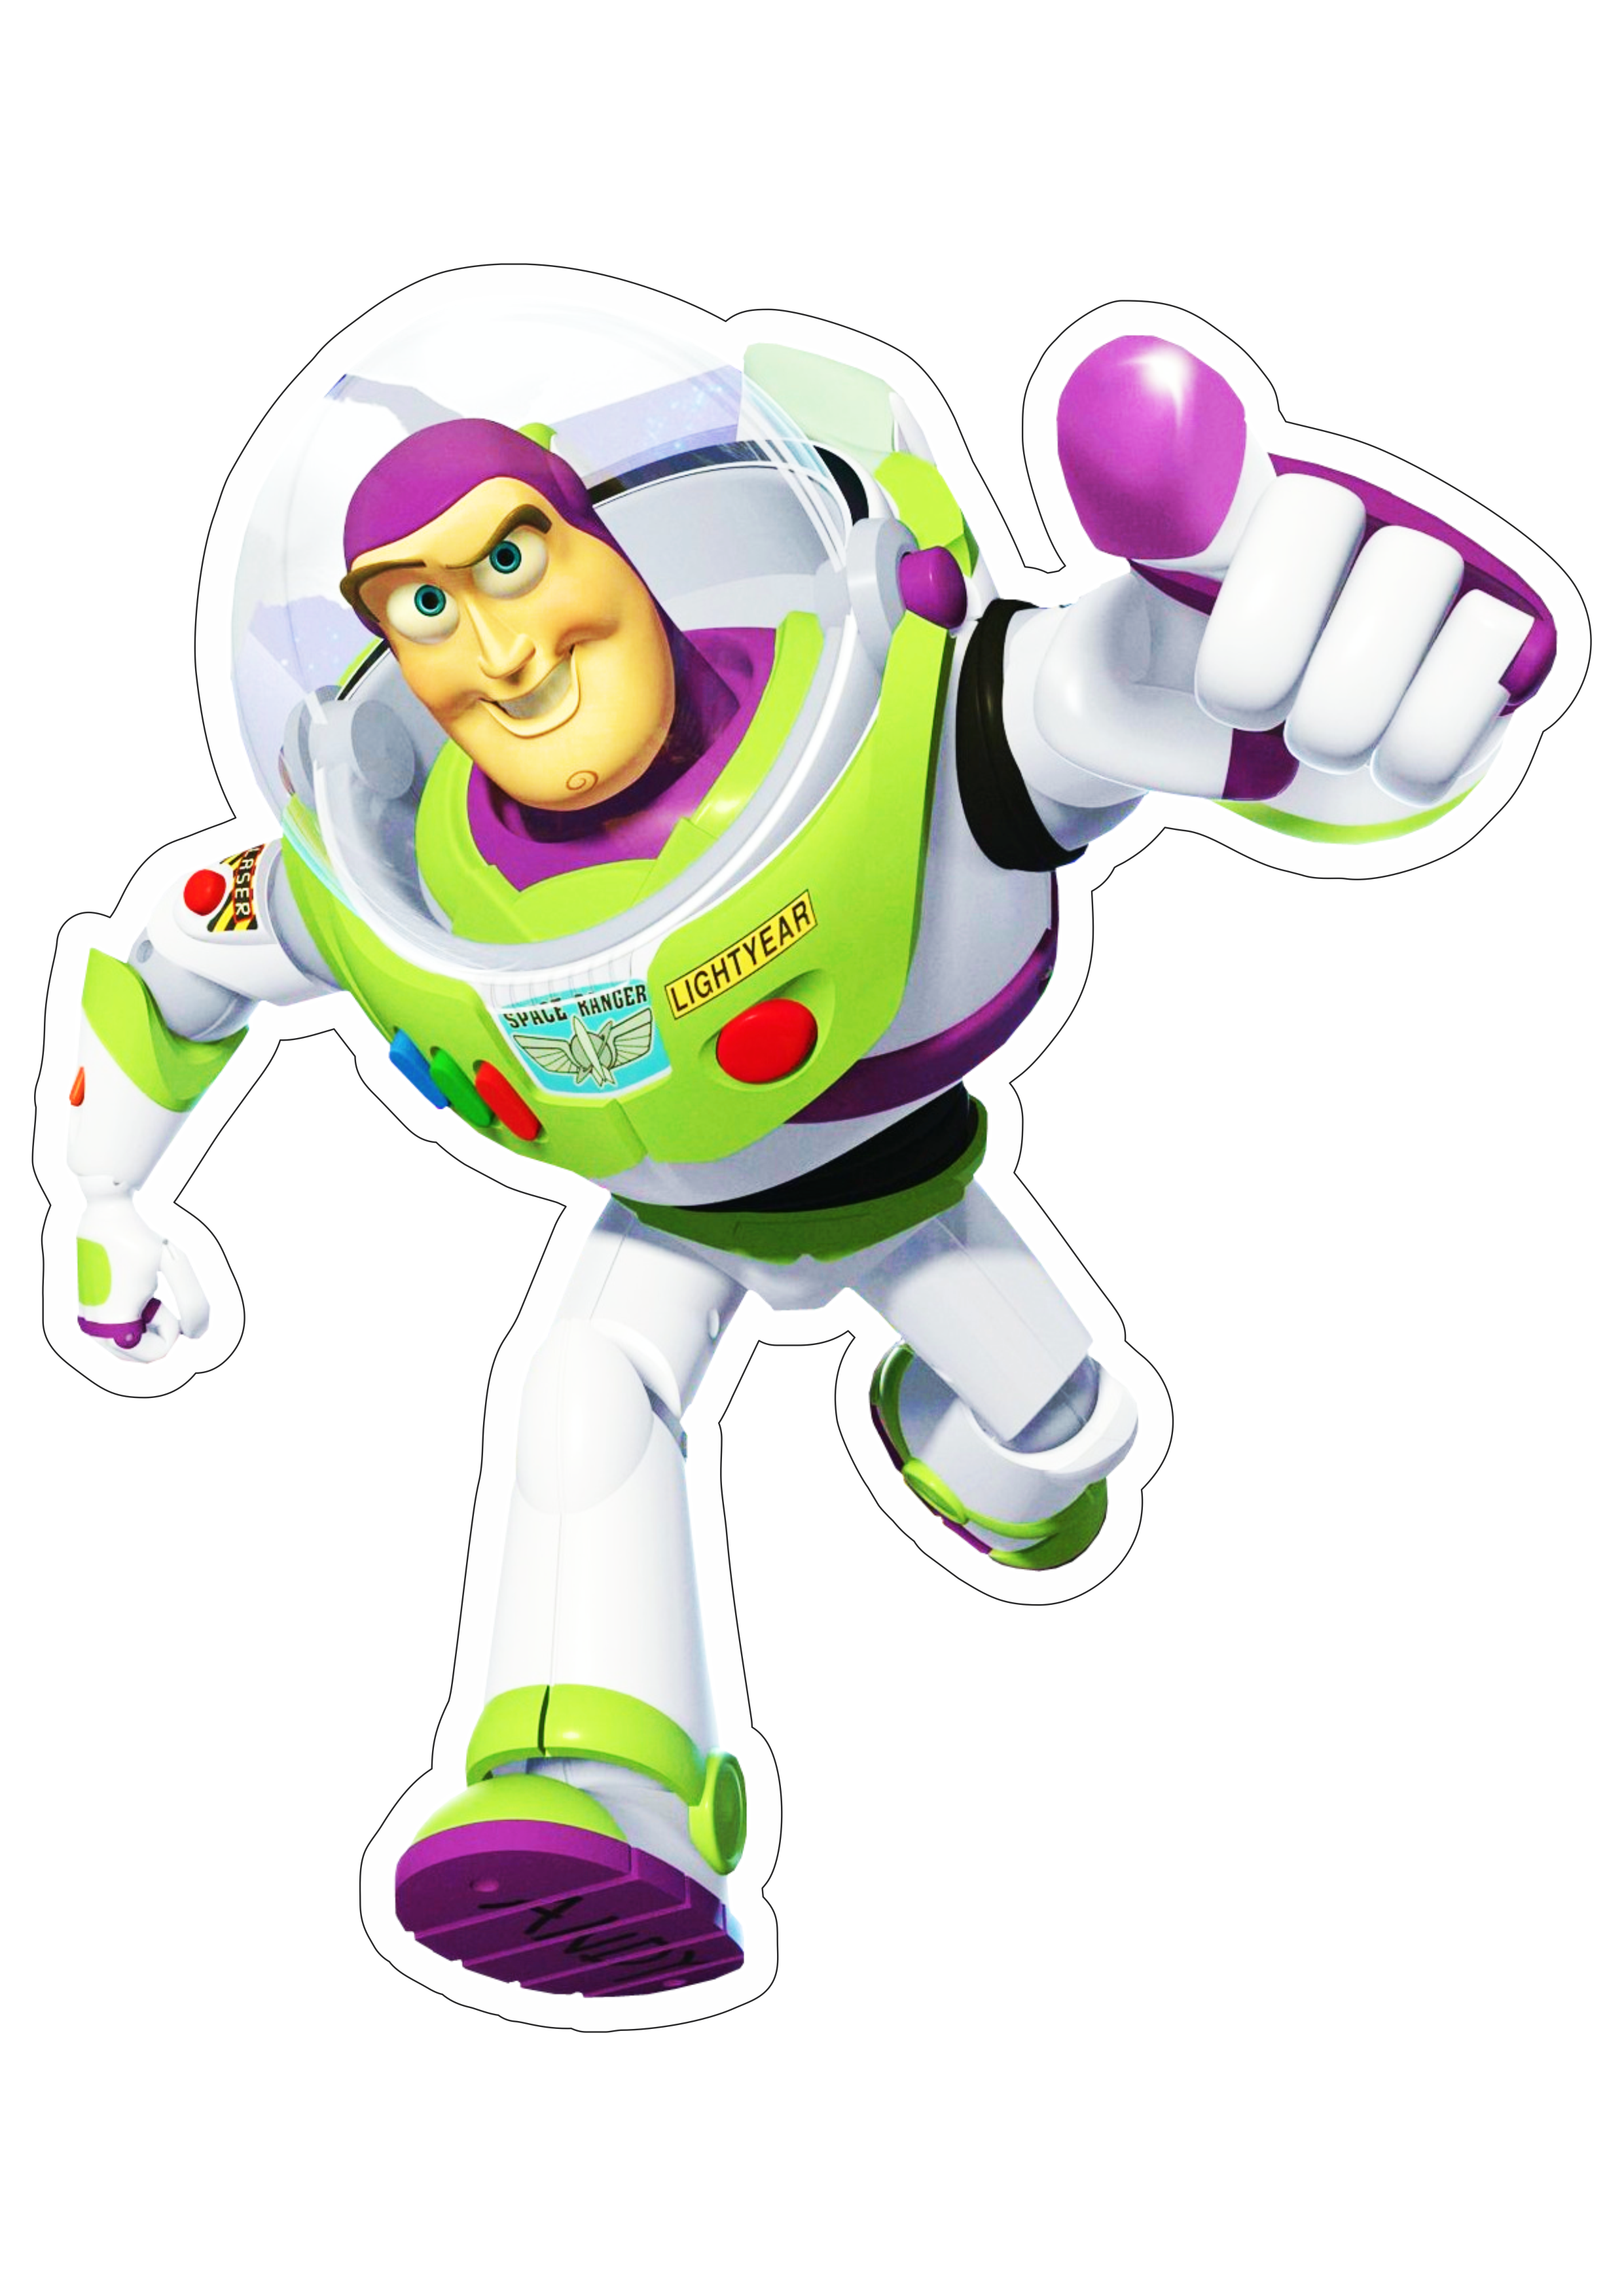 Toy Story Buzz Lightyear brinquedo astronauta disney plus png